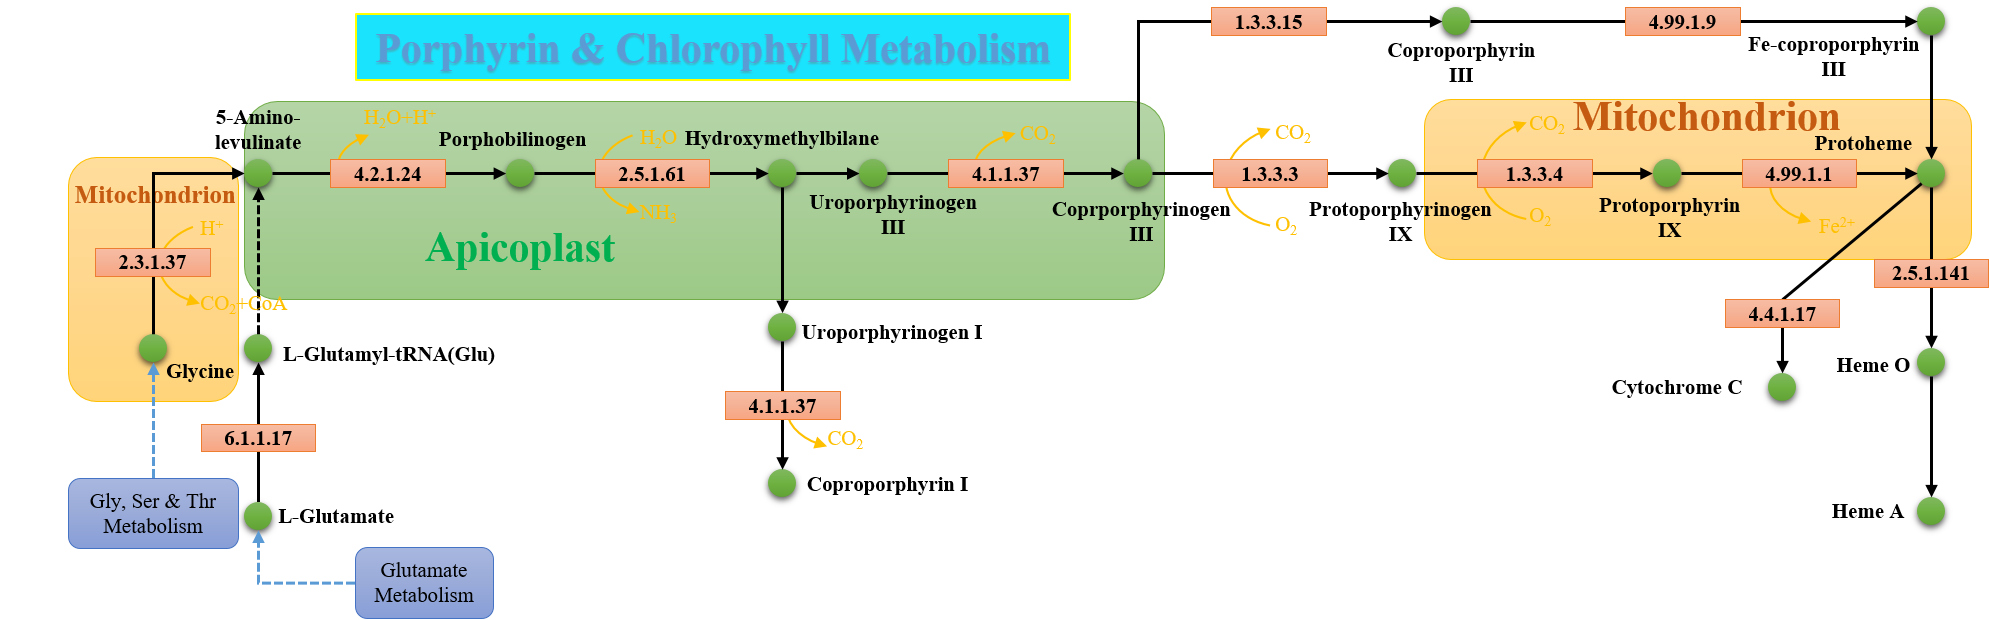 Porphyrin & Chlorophyll Metabolism